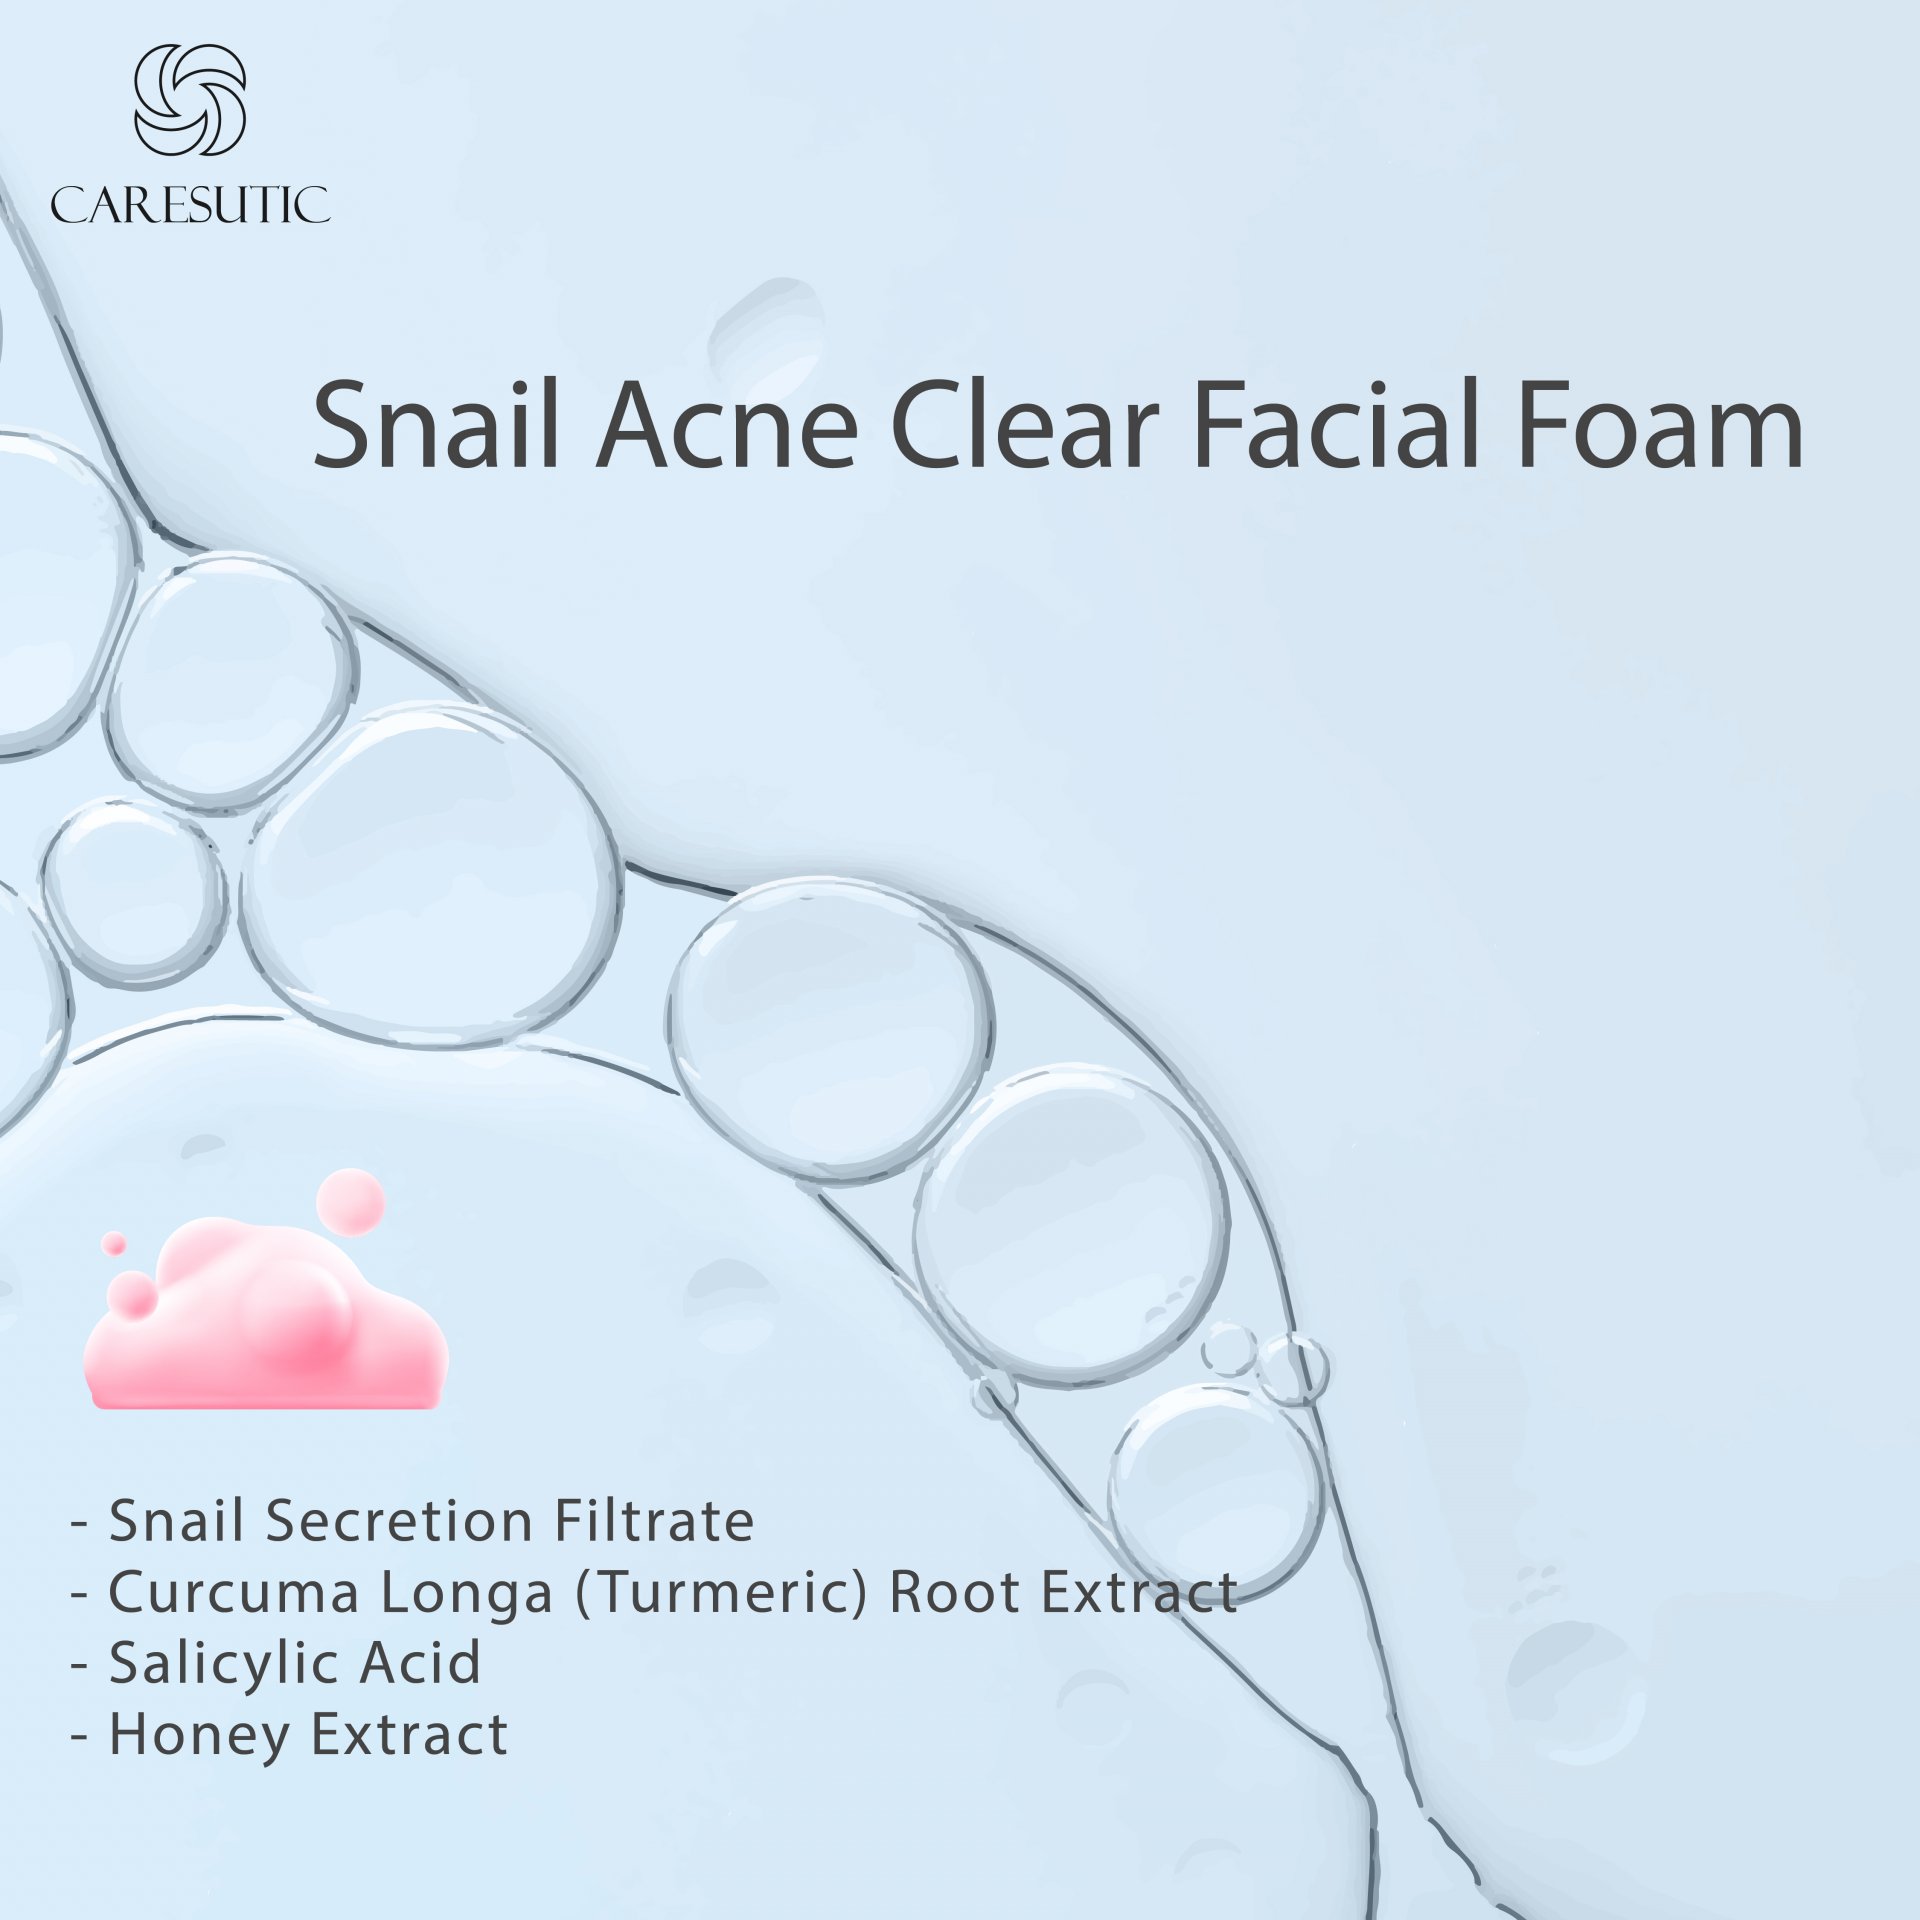 Snail Acne Clear Facial Foam